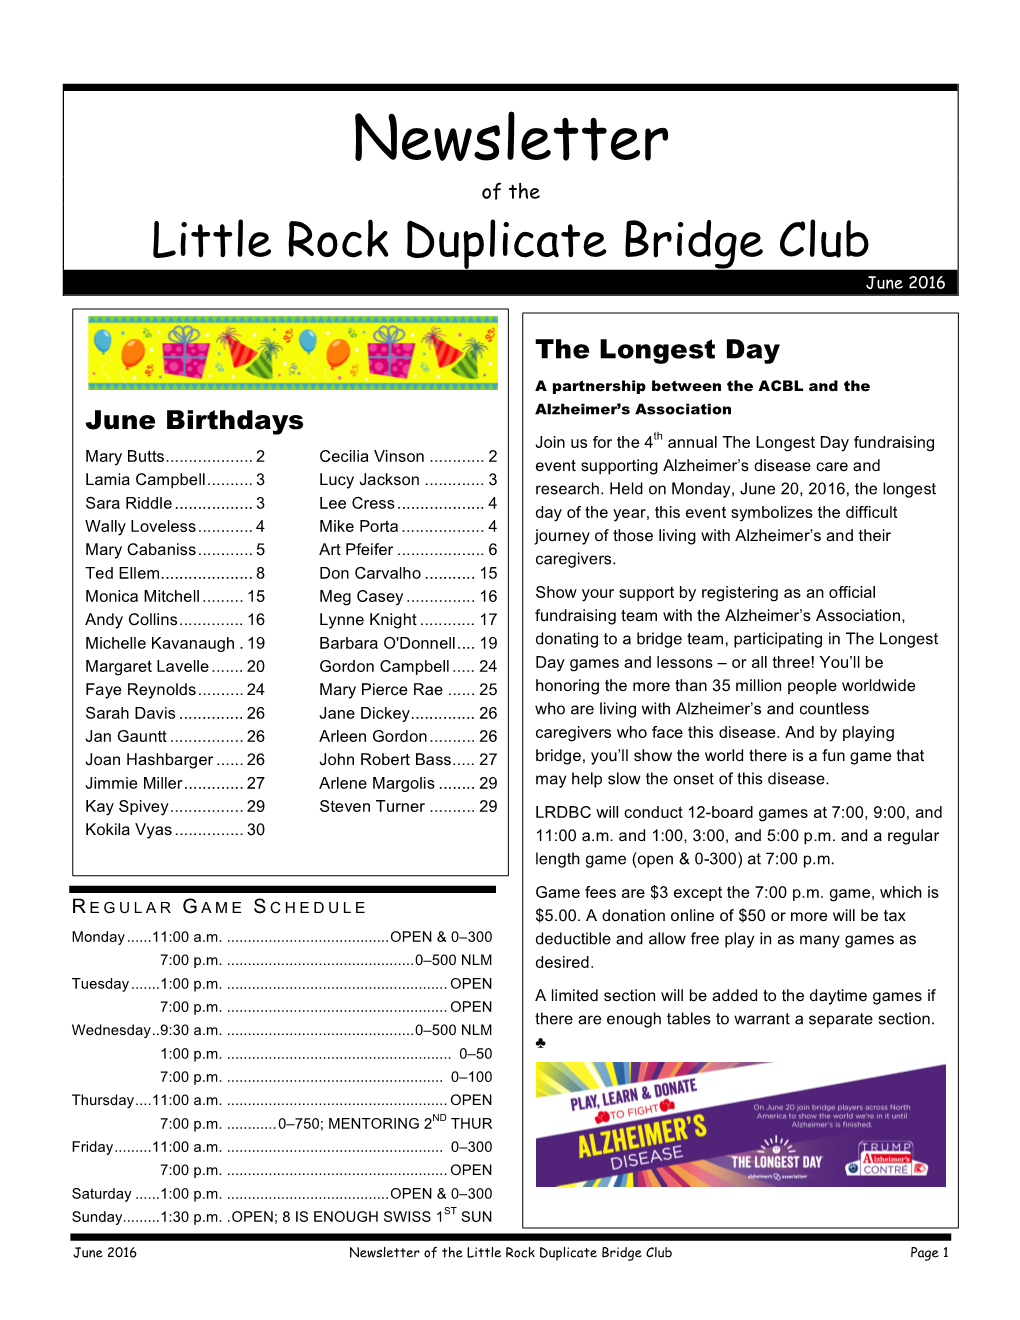 Newsletter of the Little Rock Duplicate Bridge Club June 2016